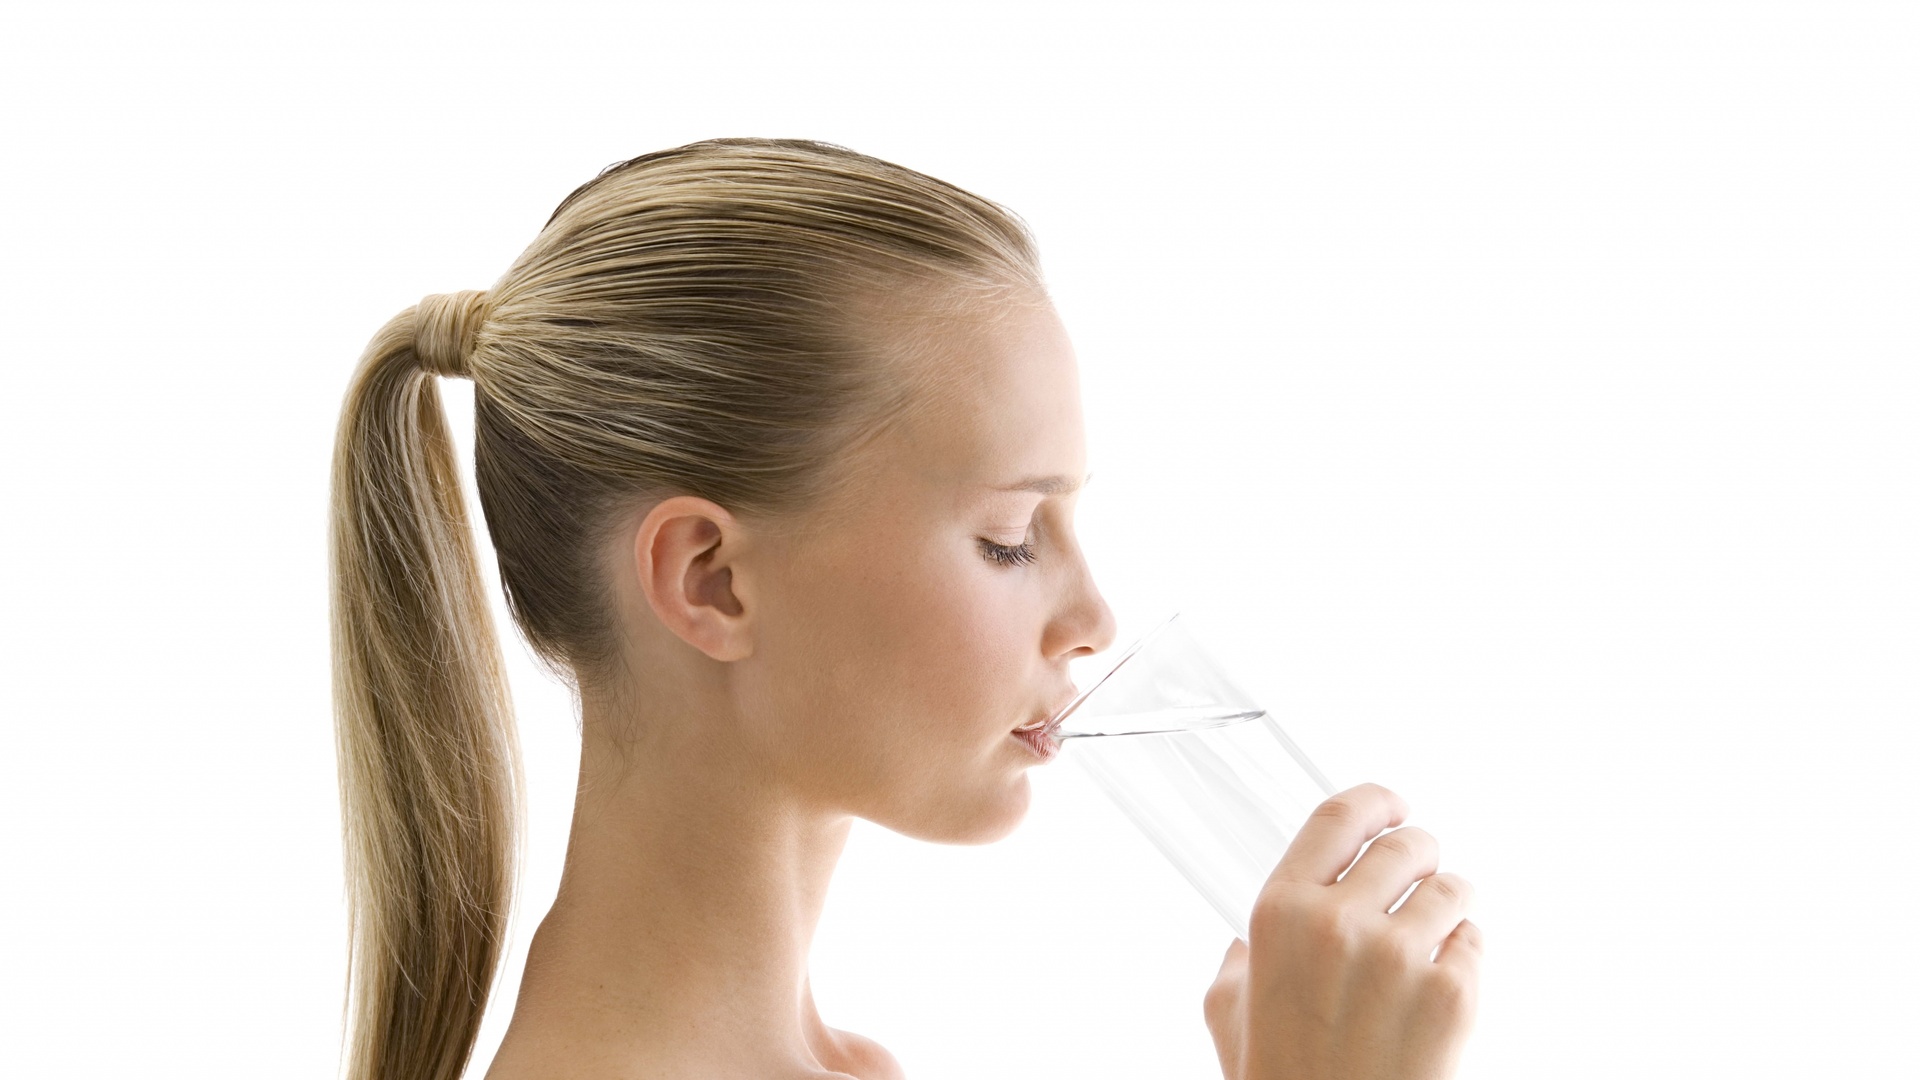 Femme boit de l'eau.jpg